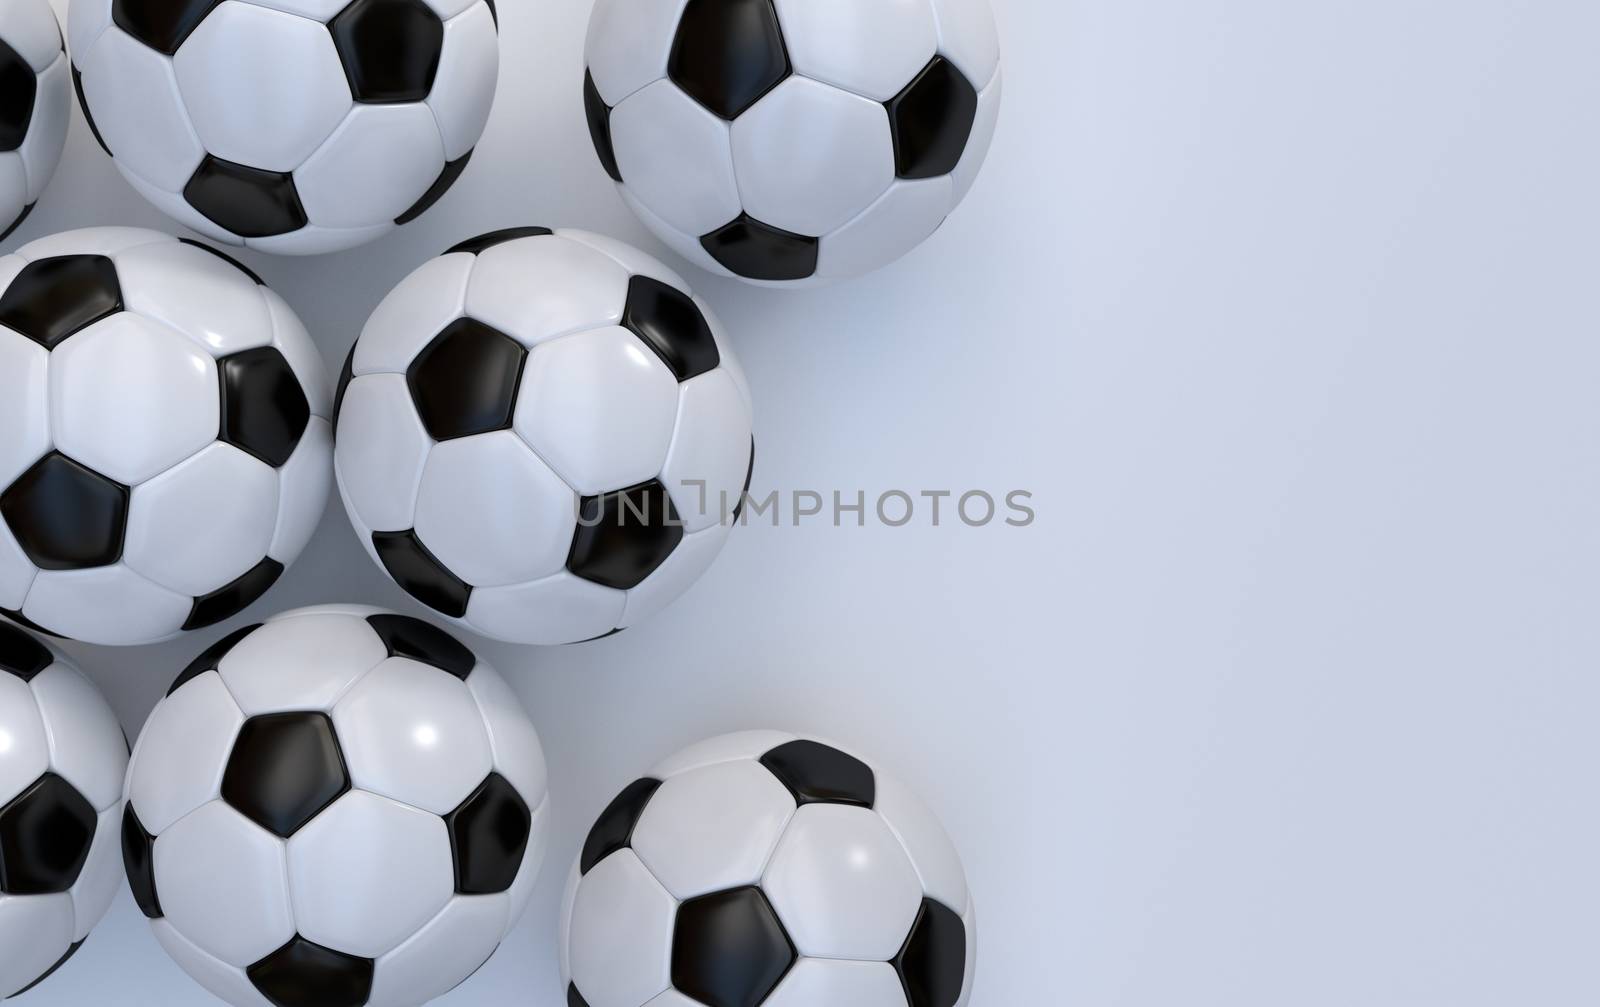 Championship soccer balls by Barbraford